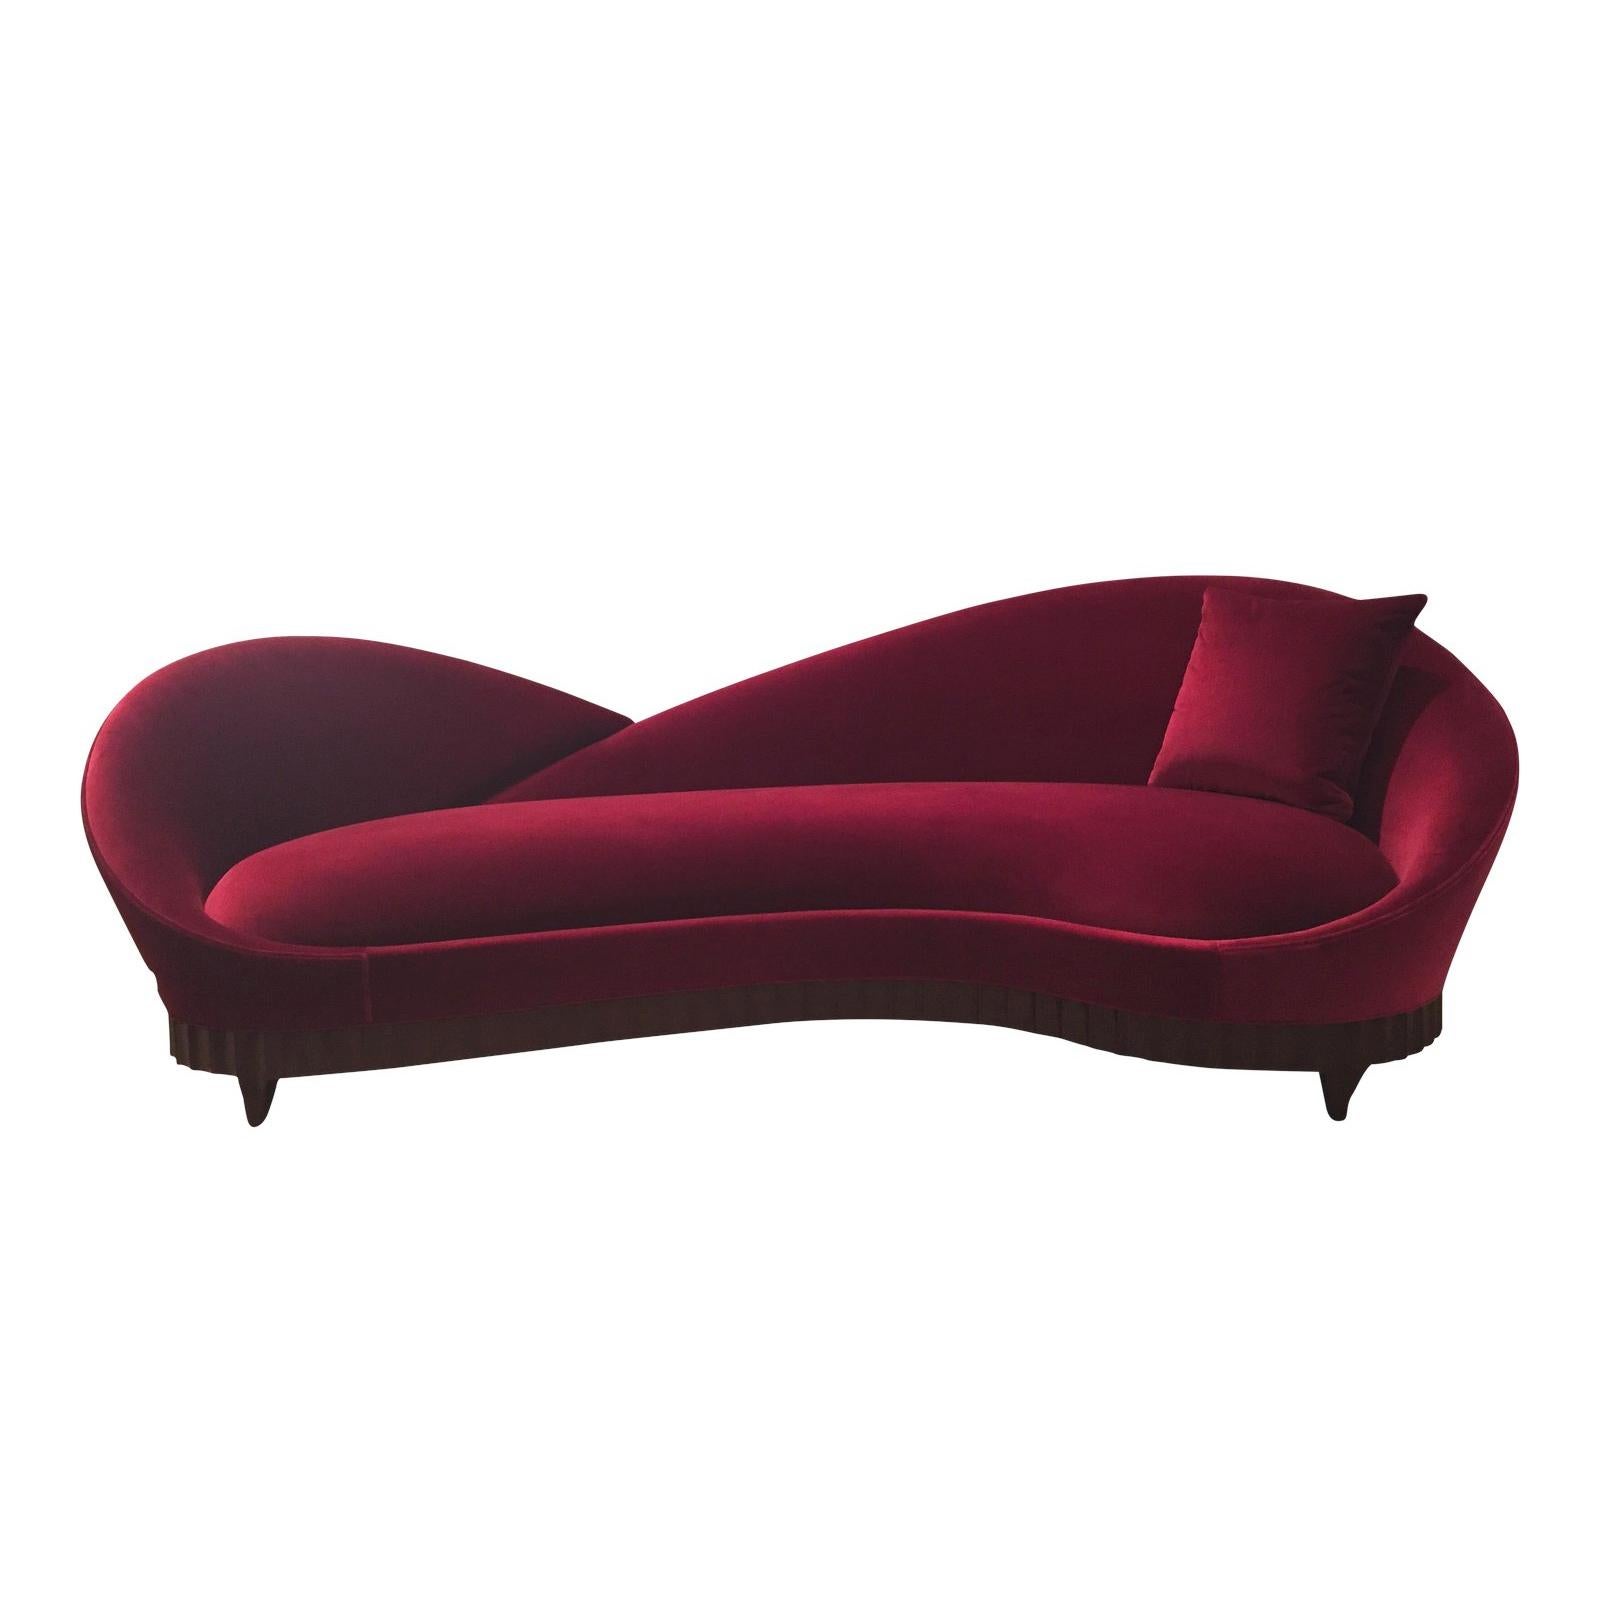 Rotes Herz-Sofa aus massivem Mahagoni und rotem Samtstoff